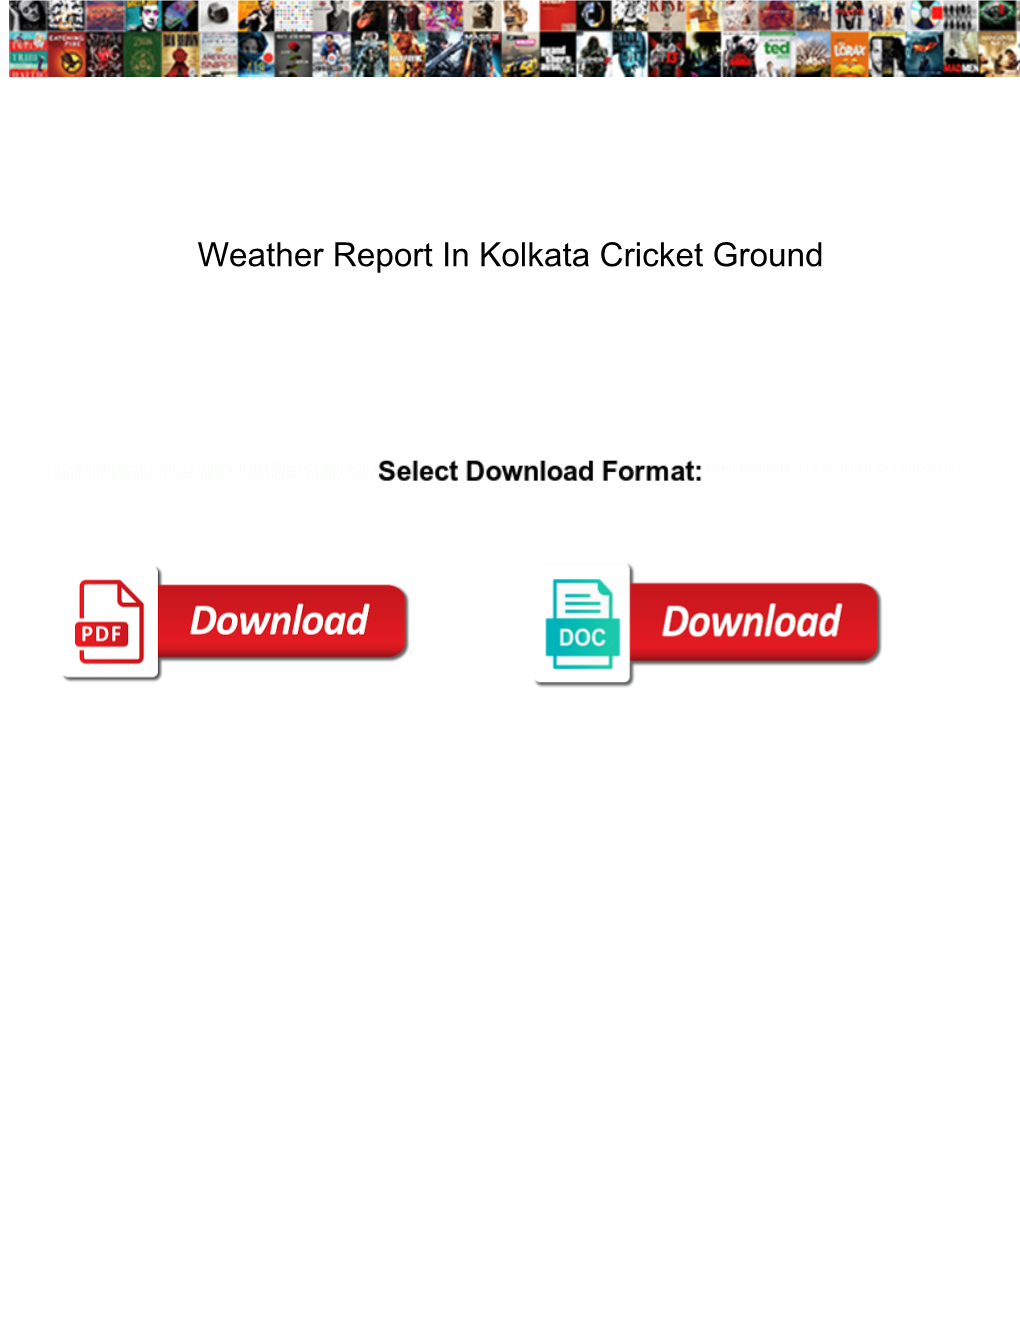 Weather Report in Kolkata Cricket Ground